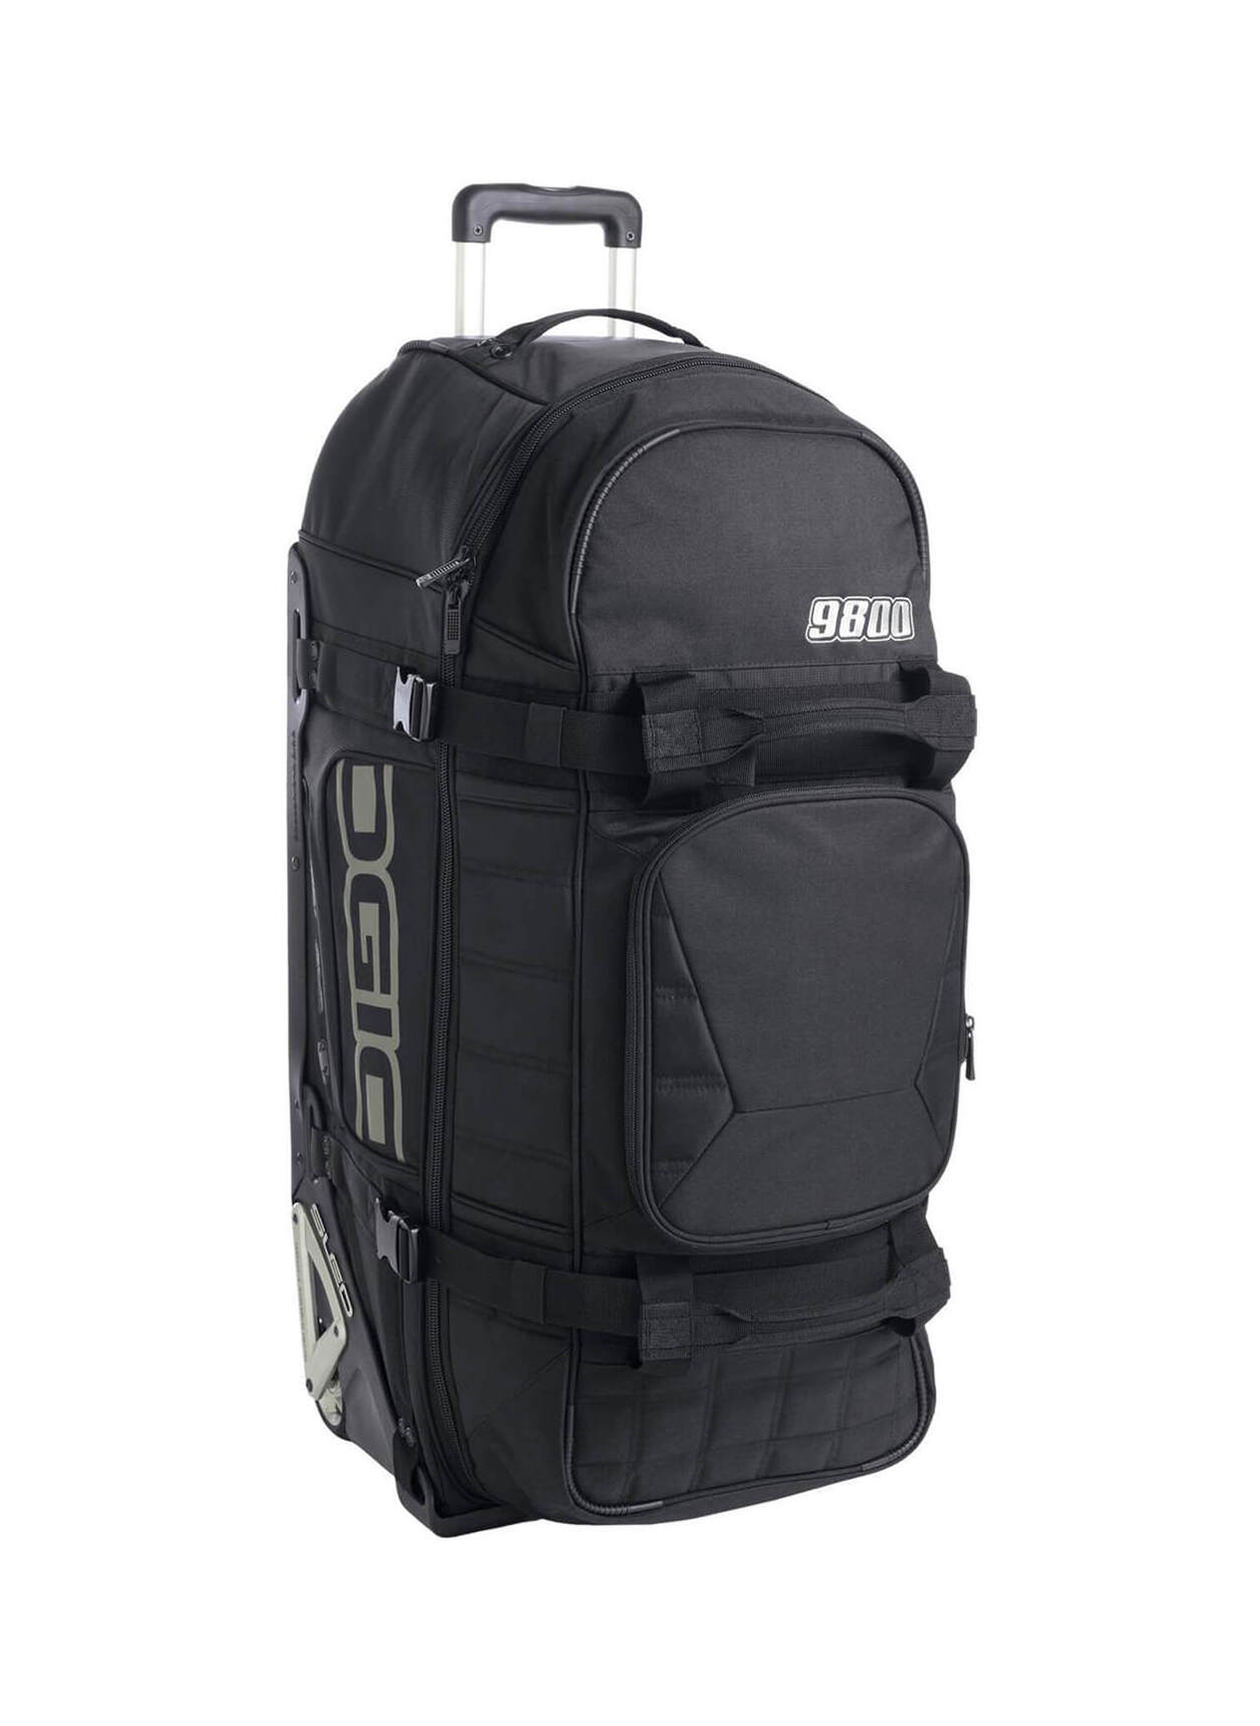 OGIO Stealth 9800 Travel Bag